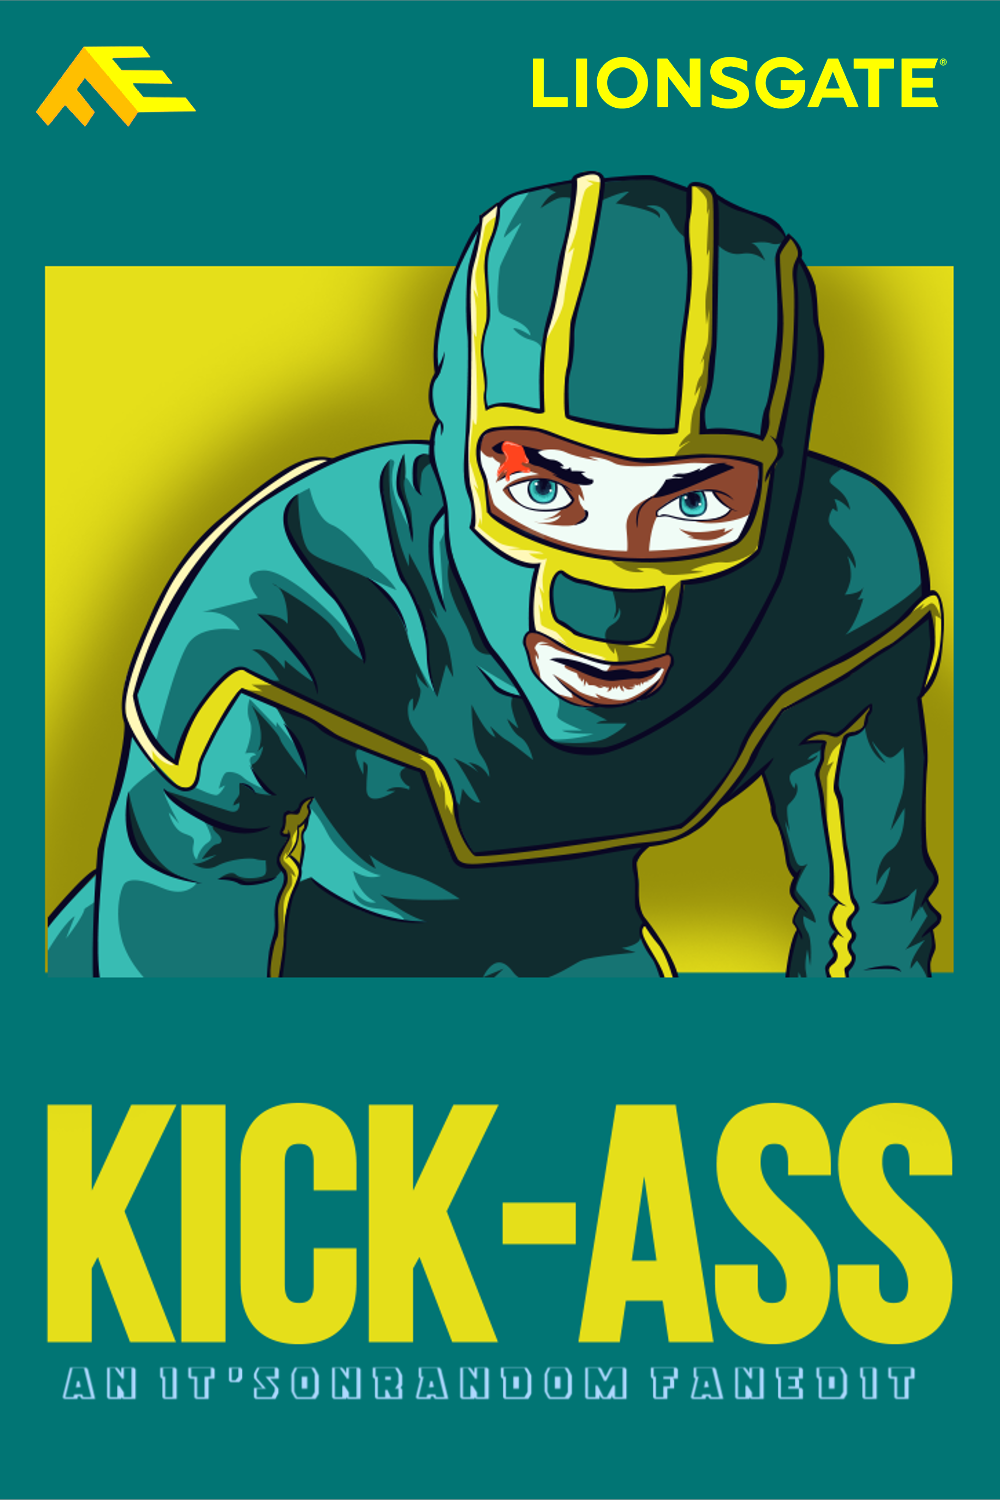 Kick Ass: Double Bill Style